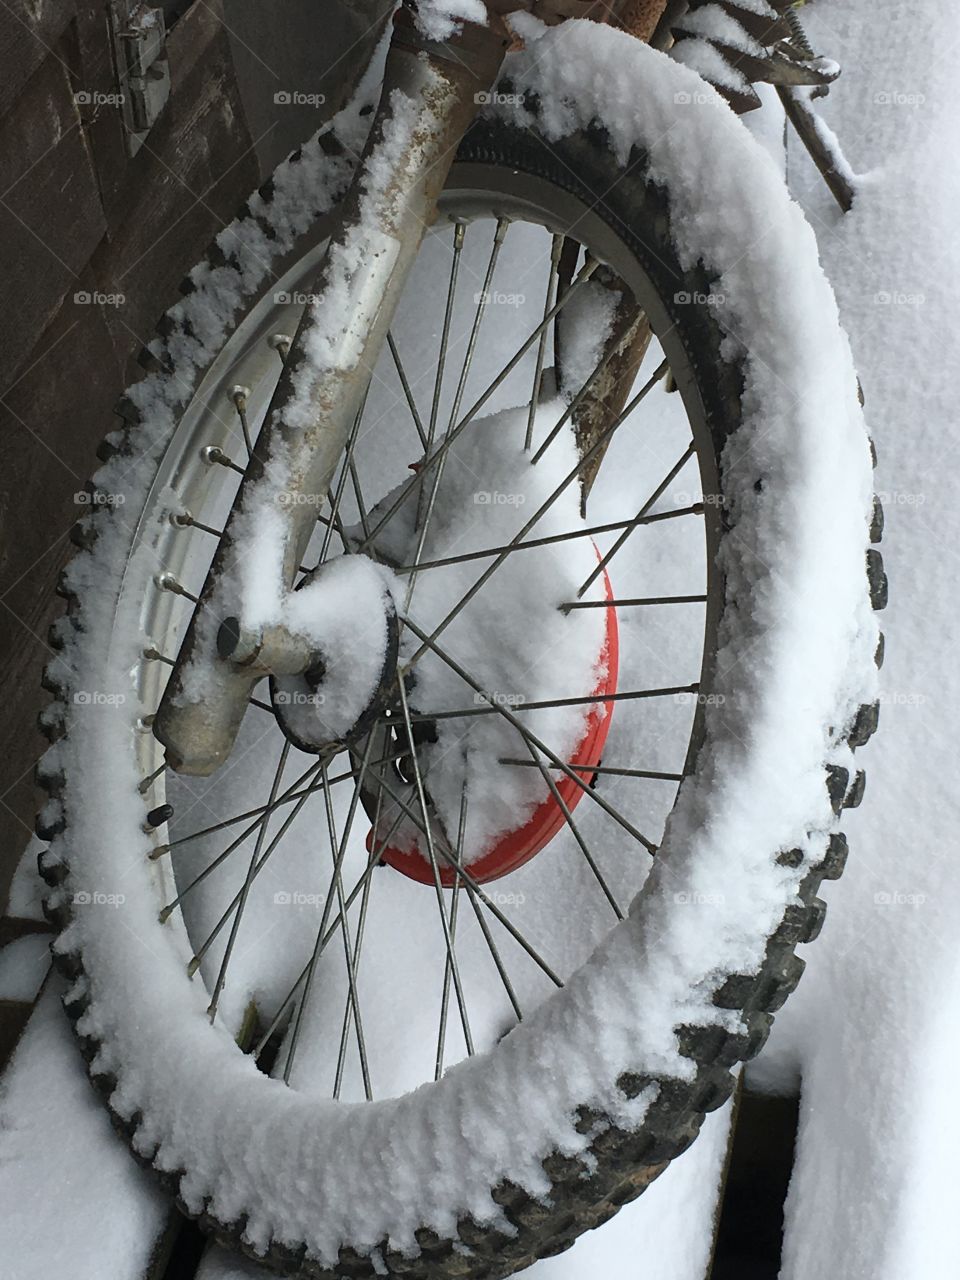 Last snow of the season in Virginia outlines a motorcycle wheel.